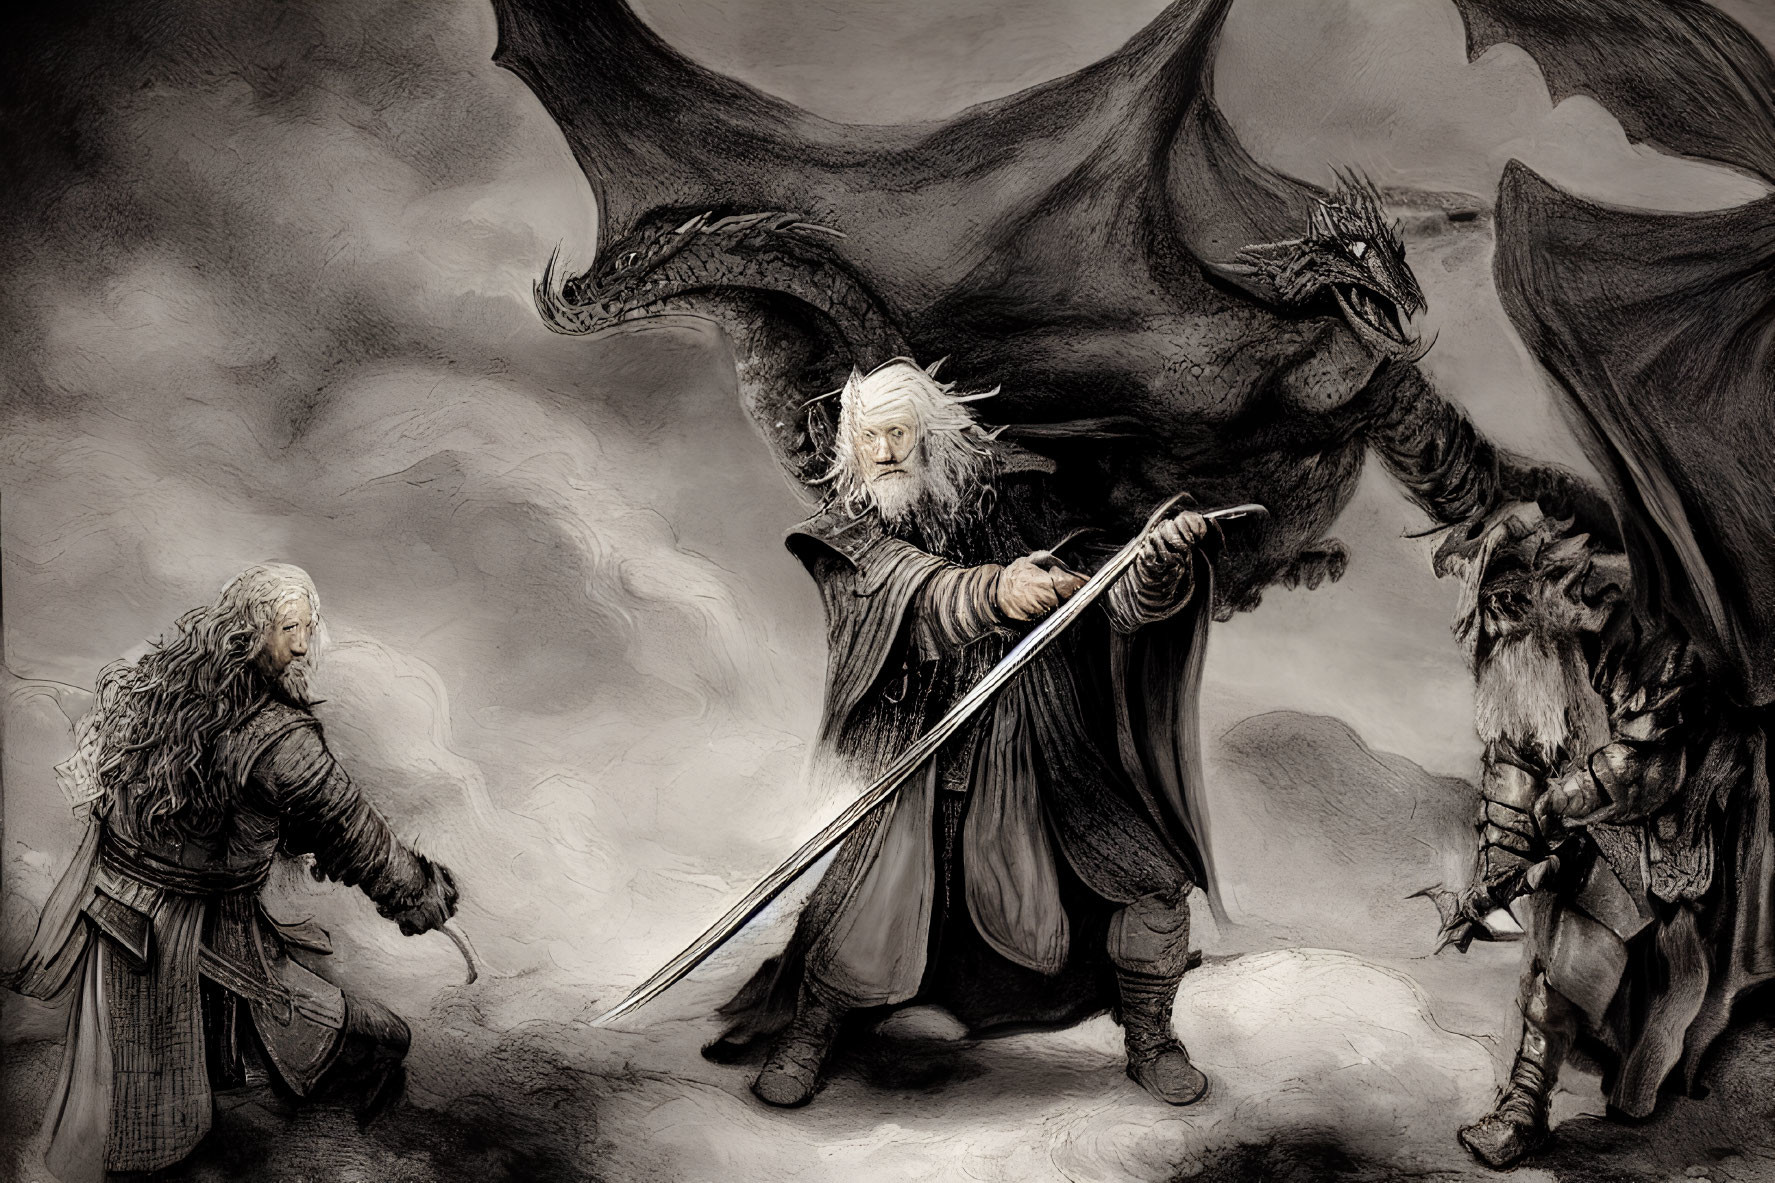 Monochrome fantasy illustration of wizard, warrior, figures, and dragon